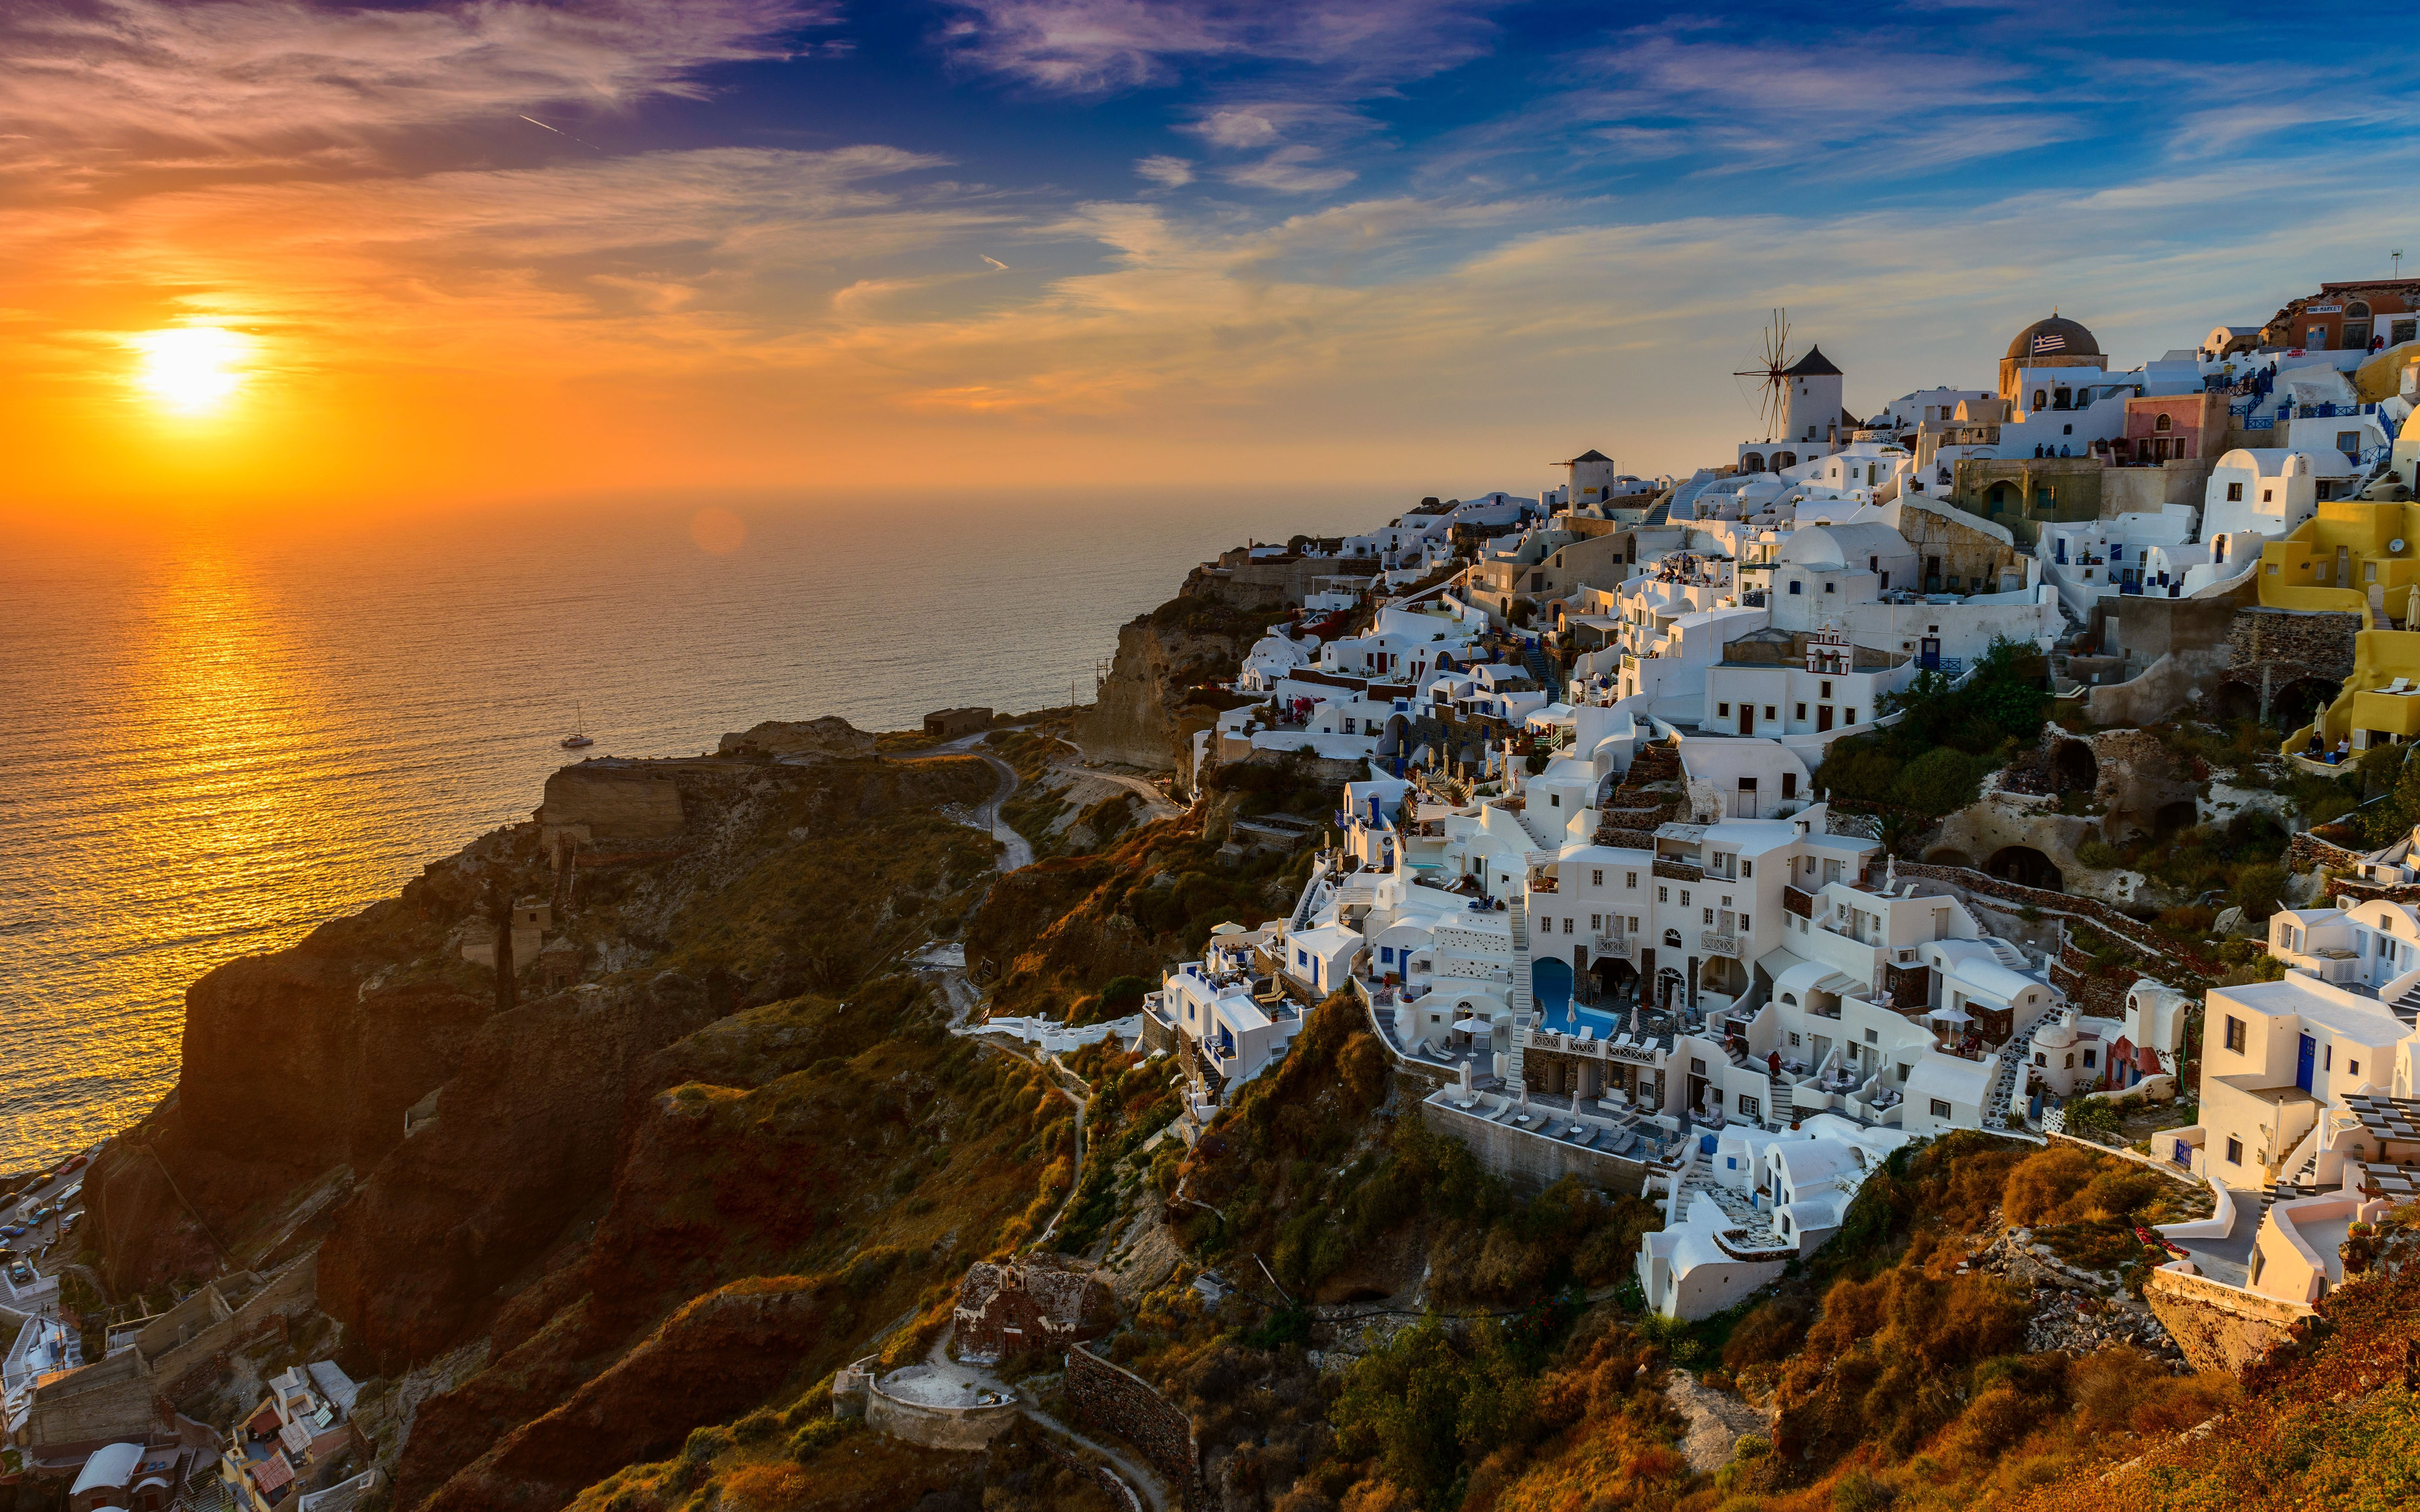 Santorini Island In Greece Aegean Sea Sunset Desktop Wallpaper Hd For Mobile Phones And Laptops 